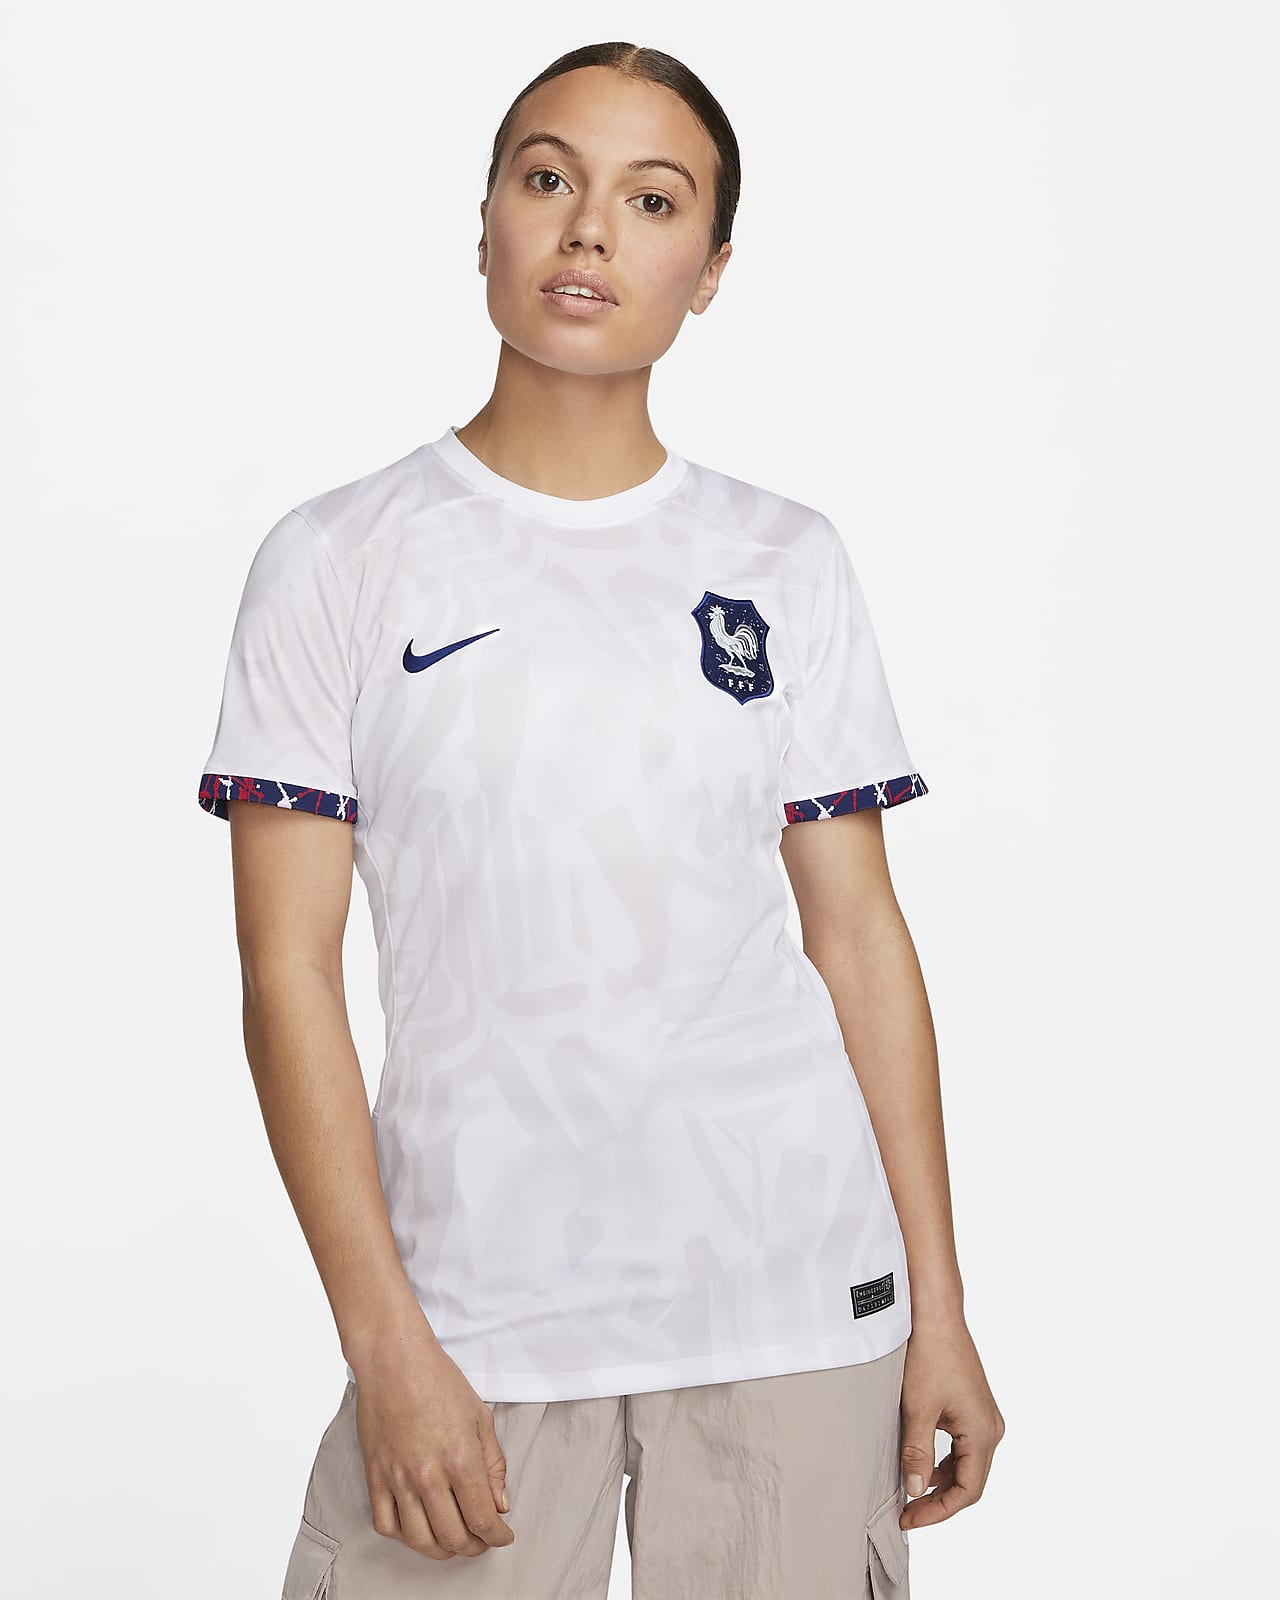 Maillot de Football Equipe de France - Femme - Blanc